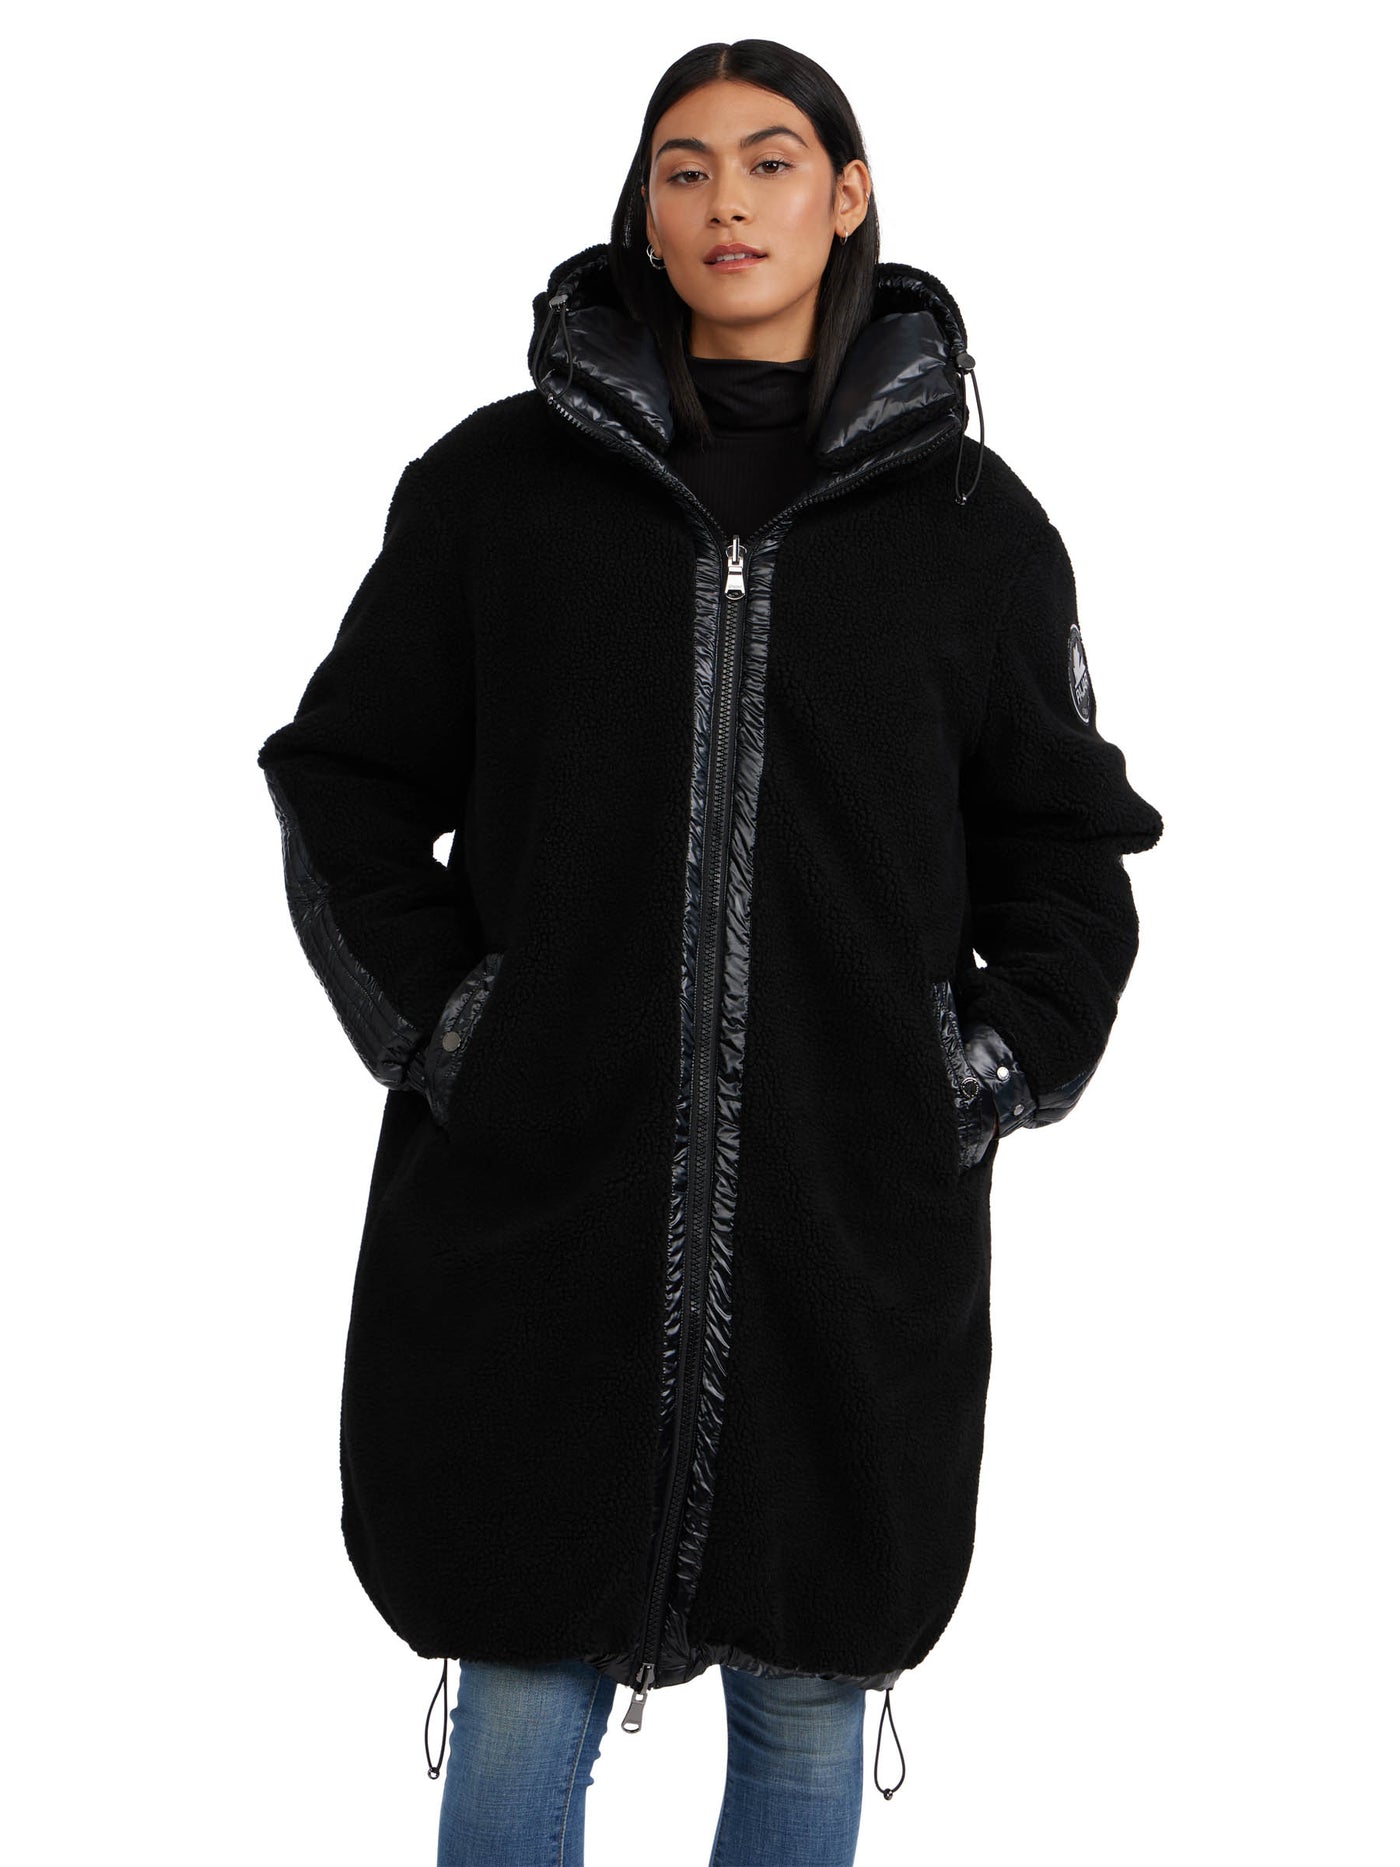 Alsephina Women's Reversible Long Puffer Jacket